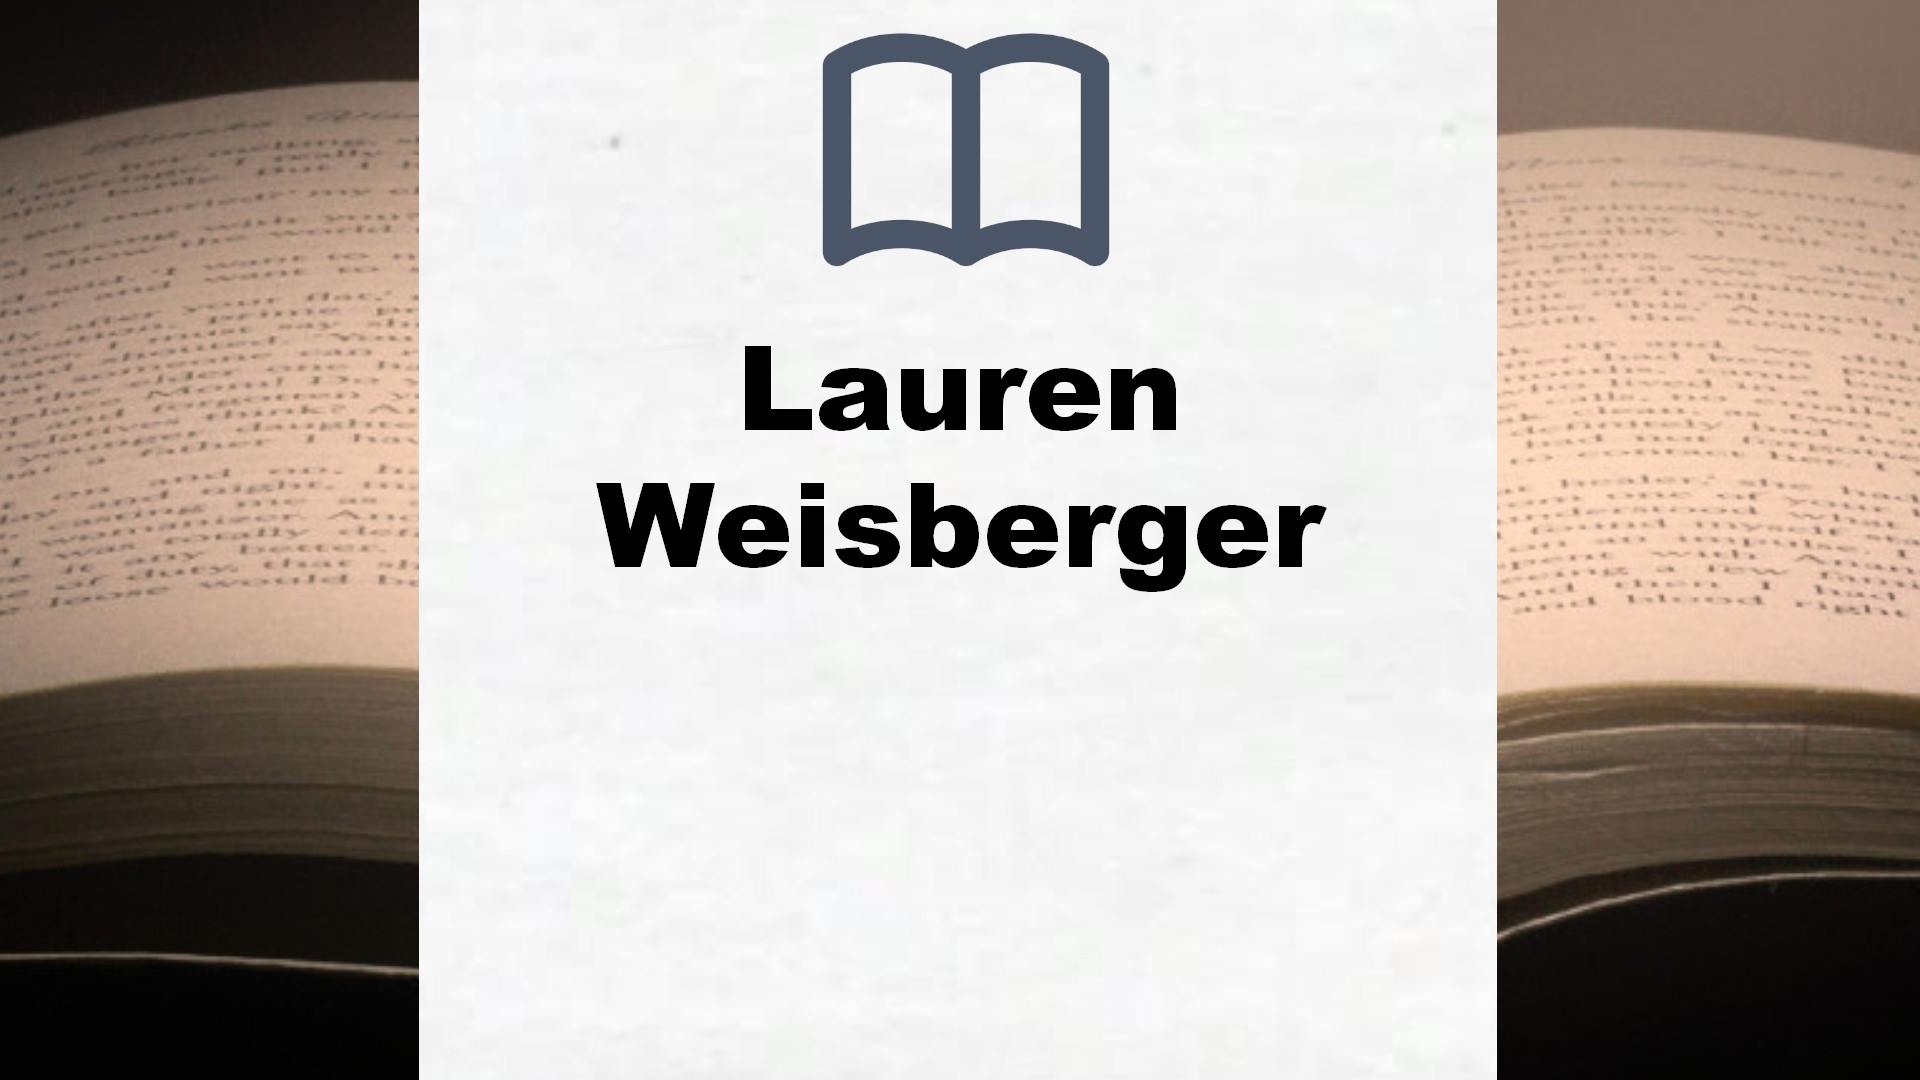 Libros Lauren Weisberger